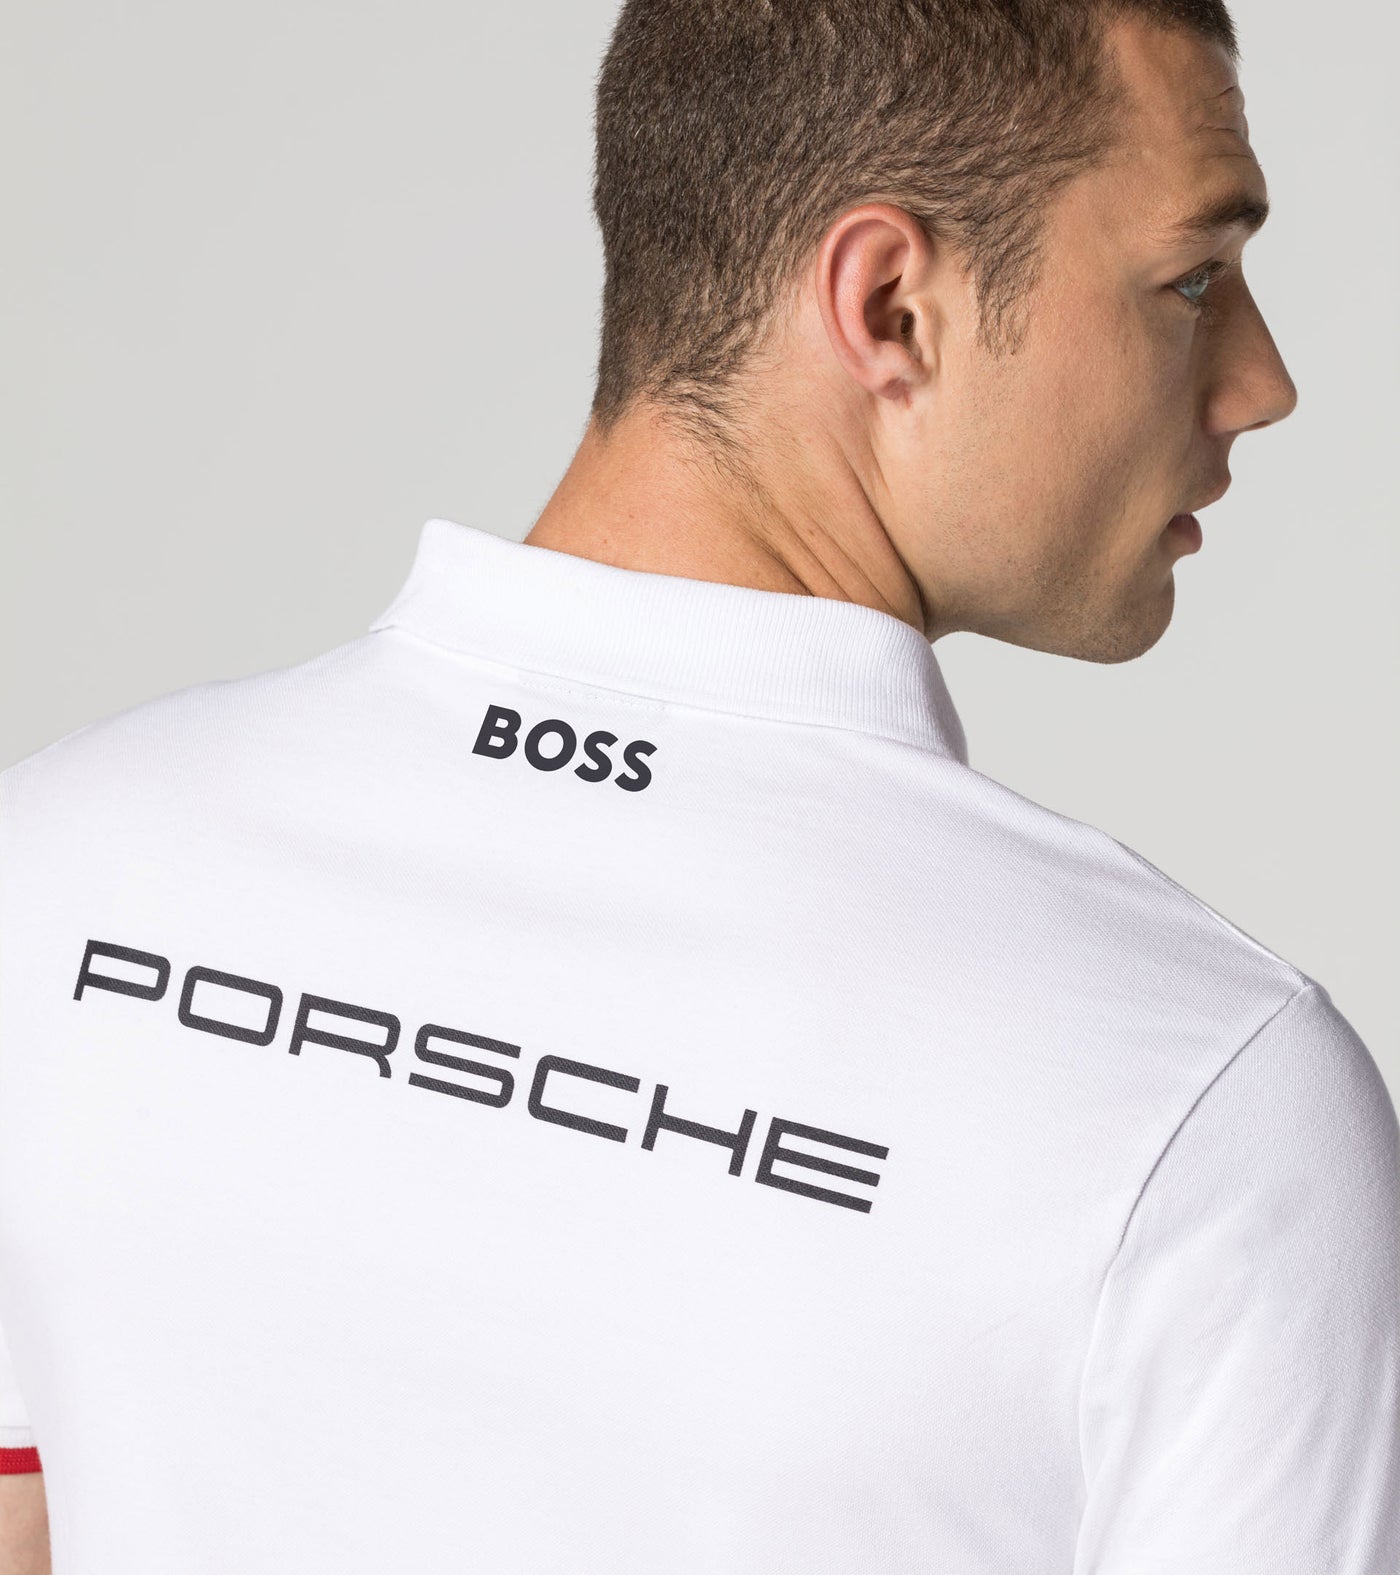 Porsche Men's Polo (White) - Motorsport